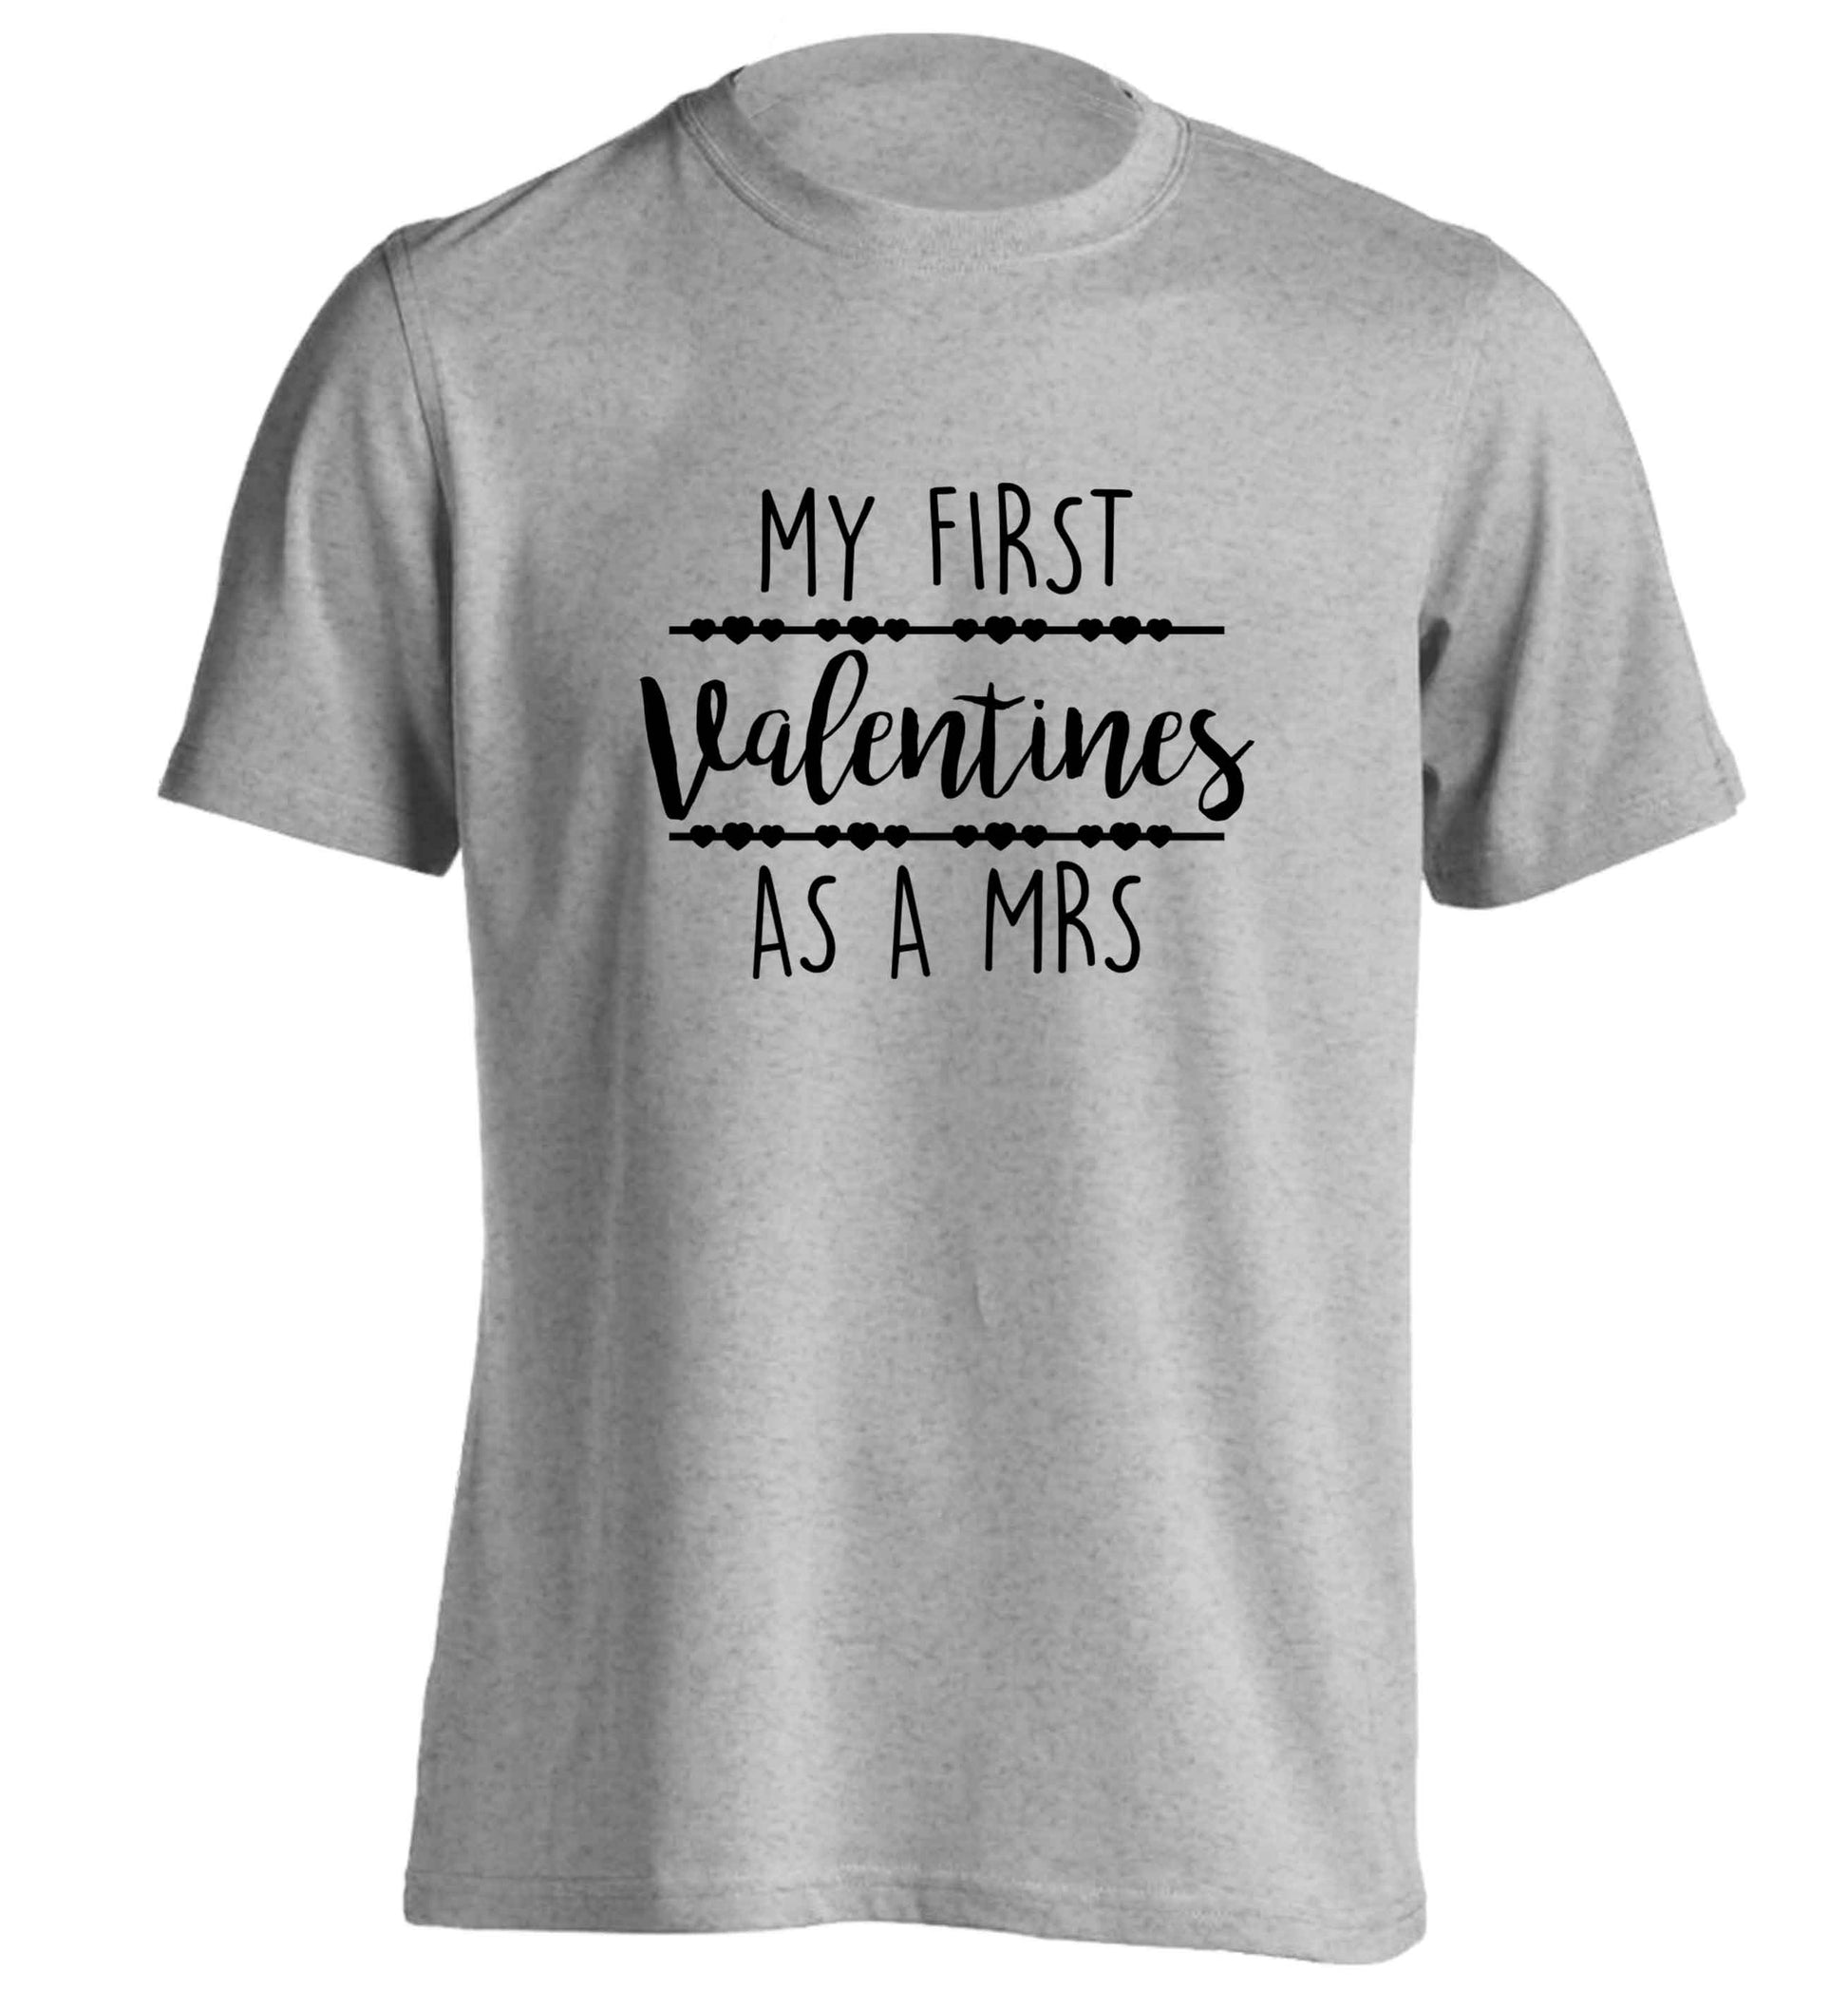 My first valentines as a Mrs adults unisex grey Tshirt 2XL